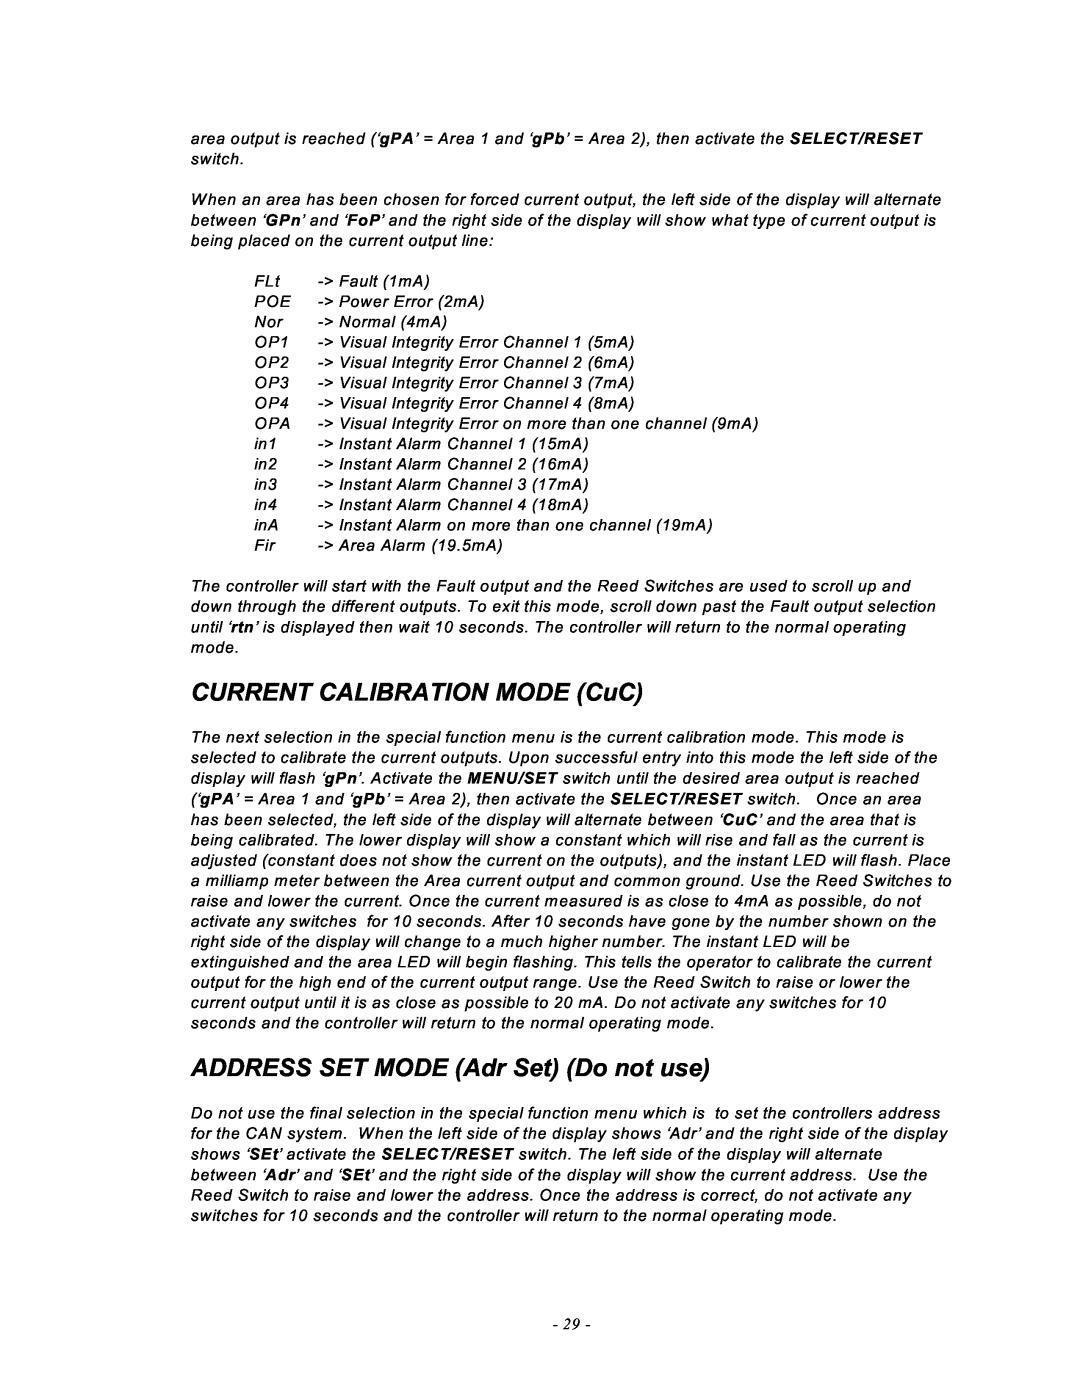 Emerson MAN -0016-00, UVC120 manual CURRENT CALIBRATION MODE CuC, ADDRESS SET MODE Adr Set Do not use 